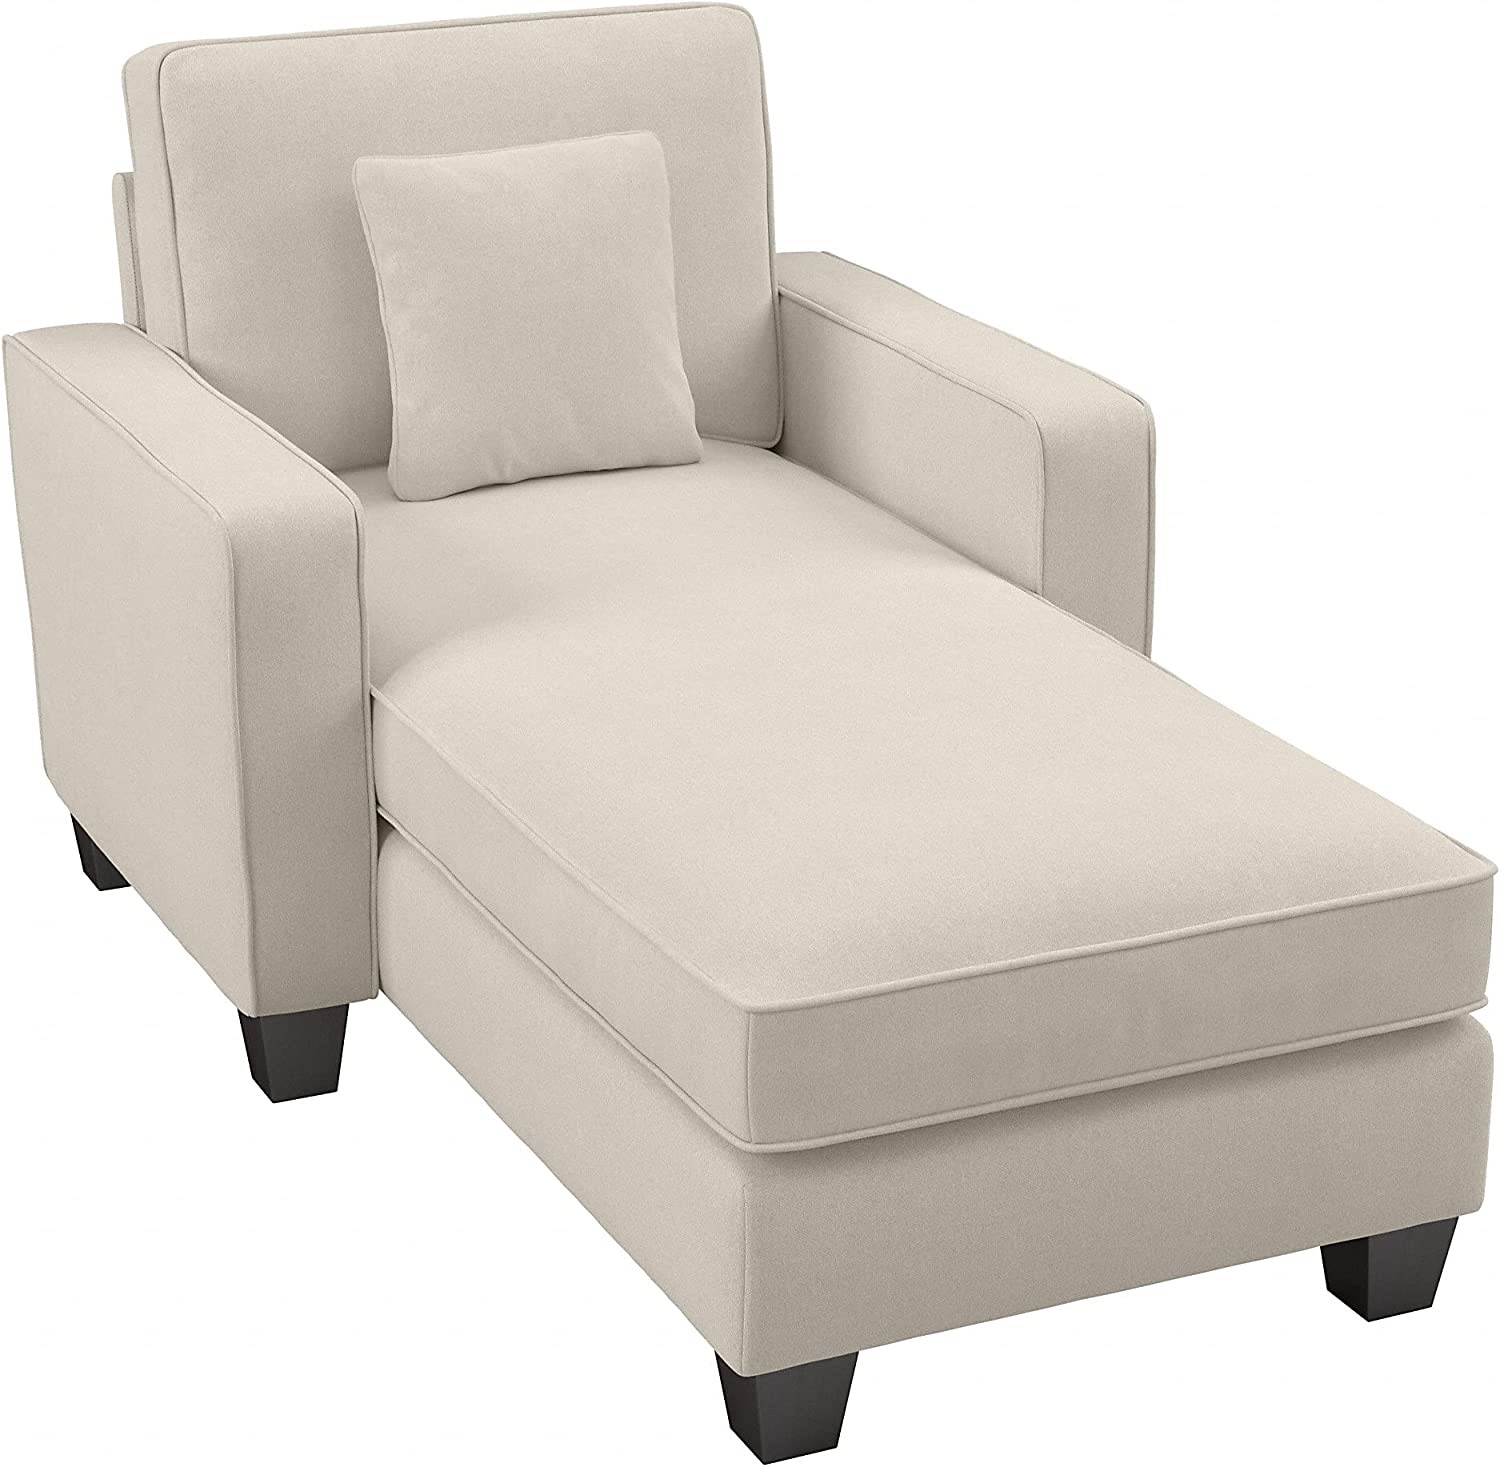 Bush Furniture Stockton Chaise Lounge